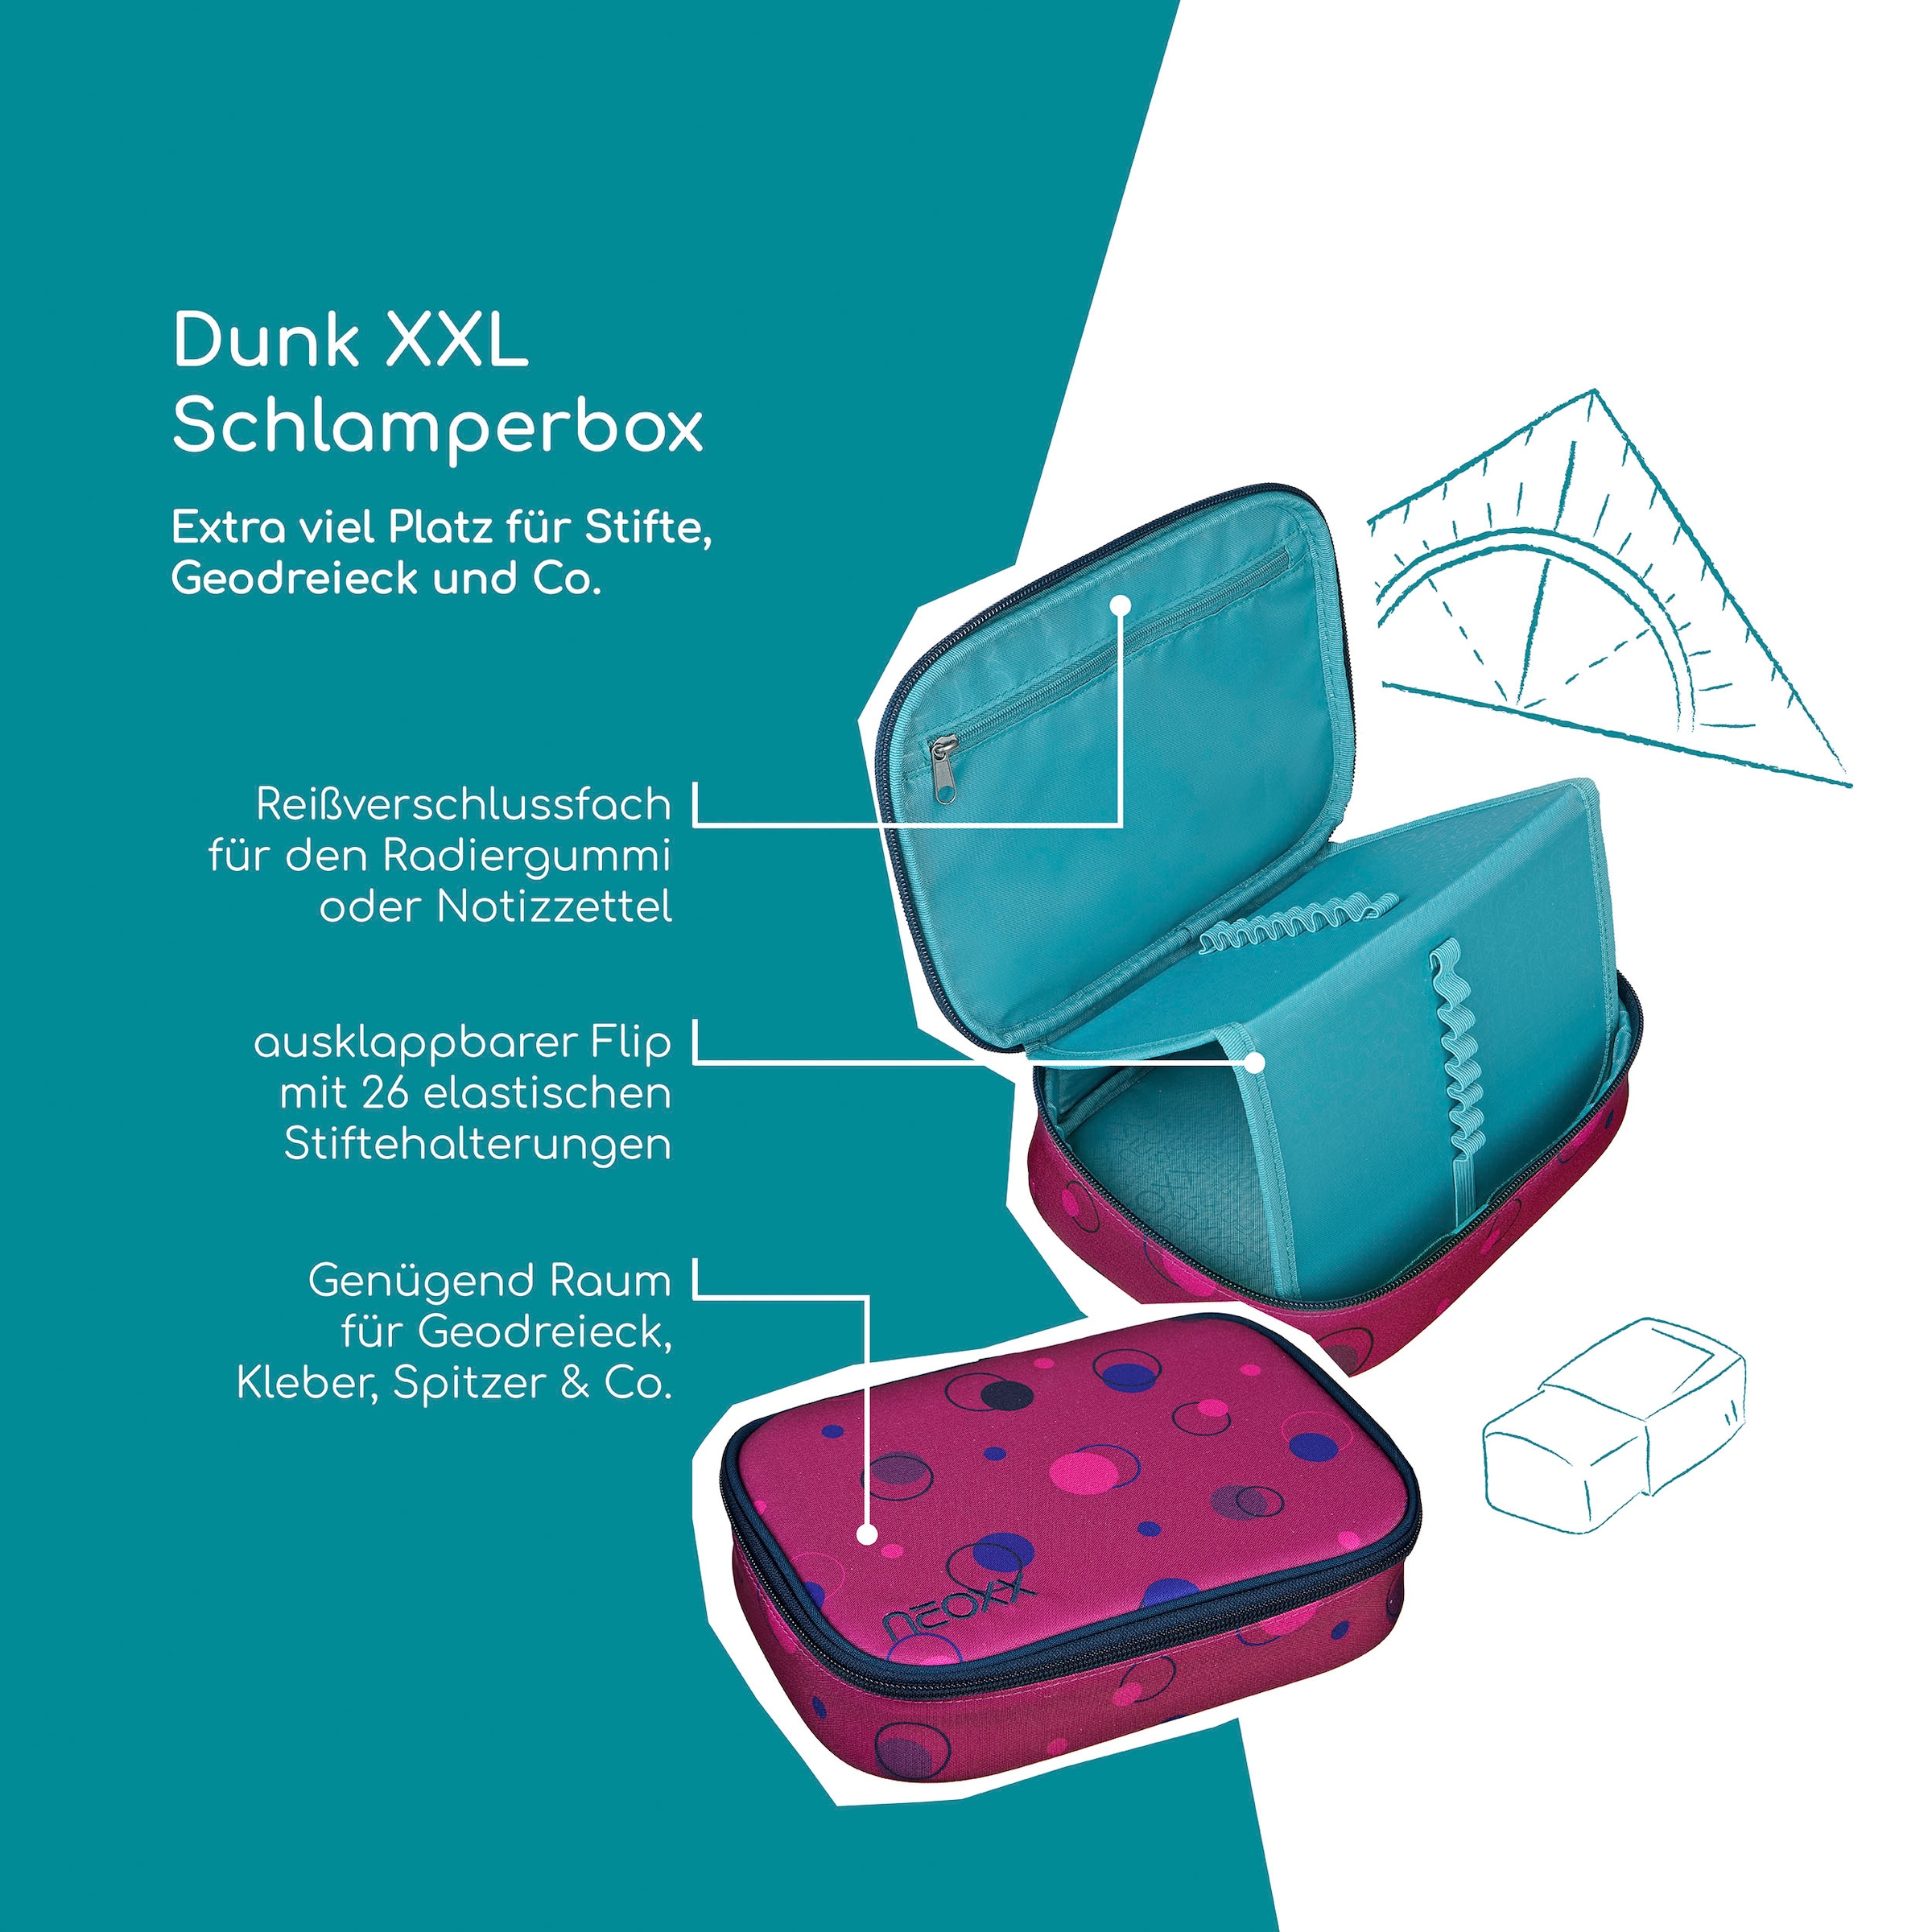 neoxx Schreibgeräteetui »Schlamperbox, Dunk, Bubble me around«, teilweise aus recyceltem Material